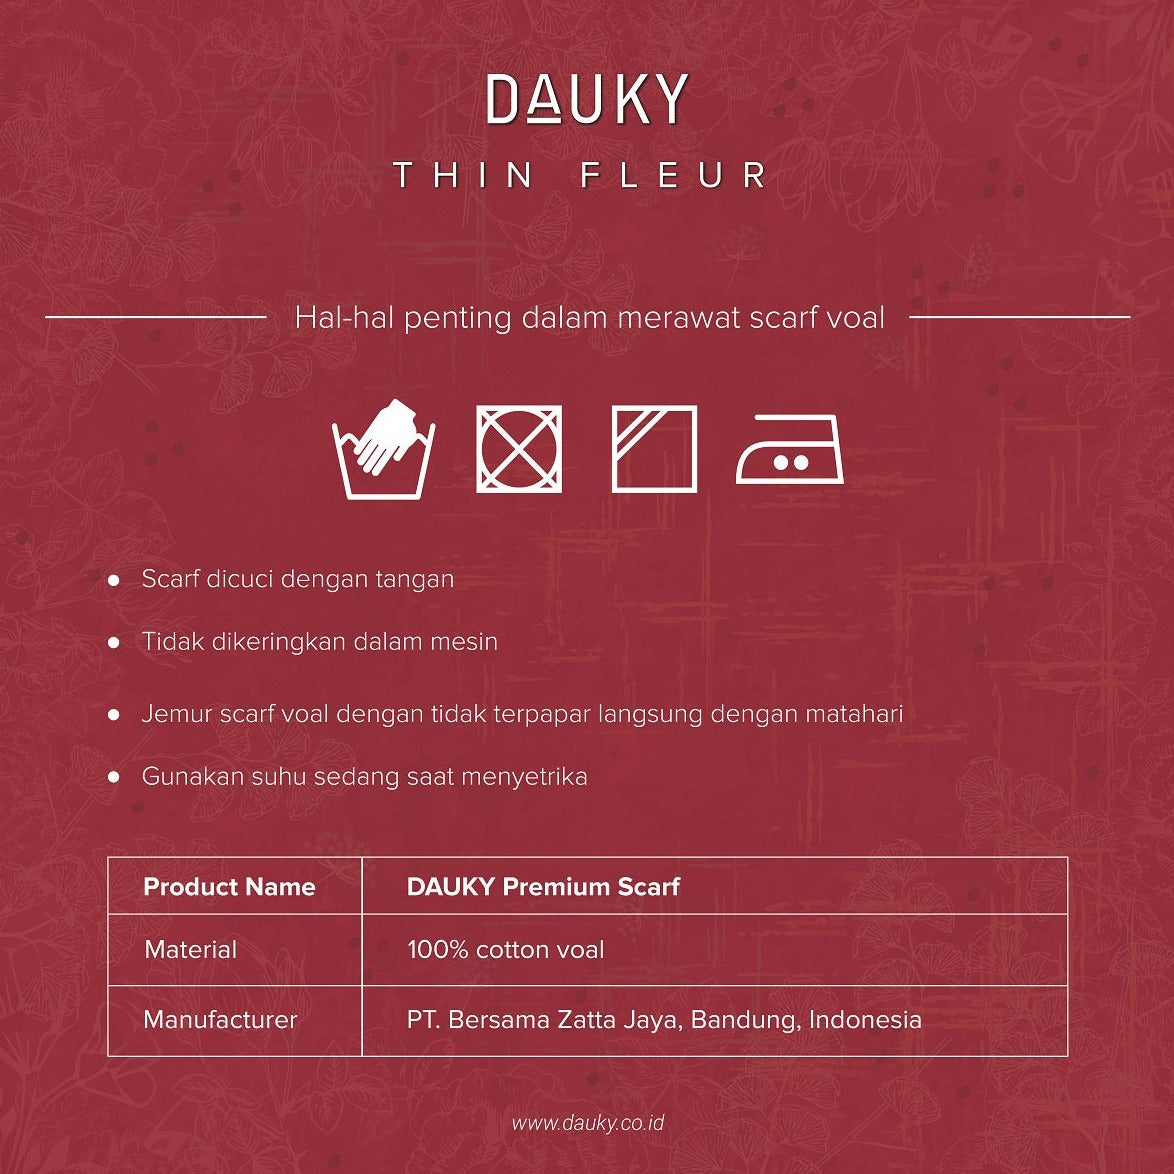 Jilbab Segiempat Dauky Thin Fleur Premium Scarf - Merah